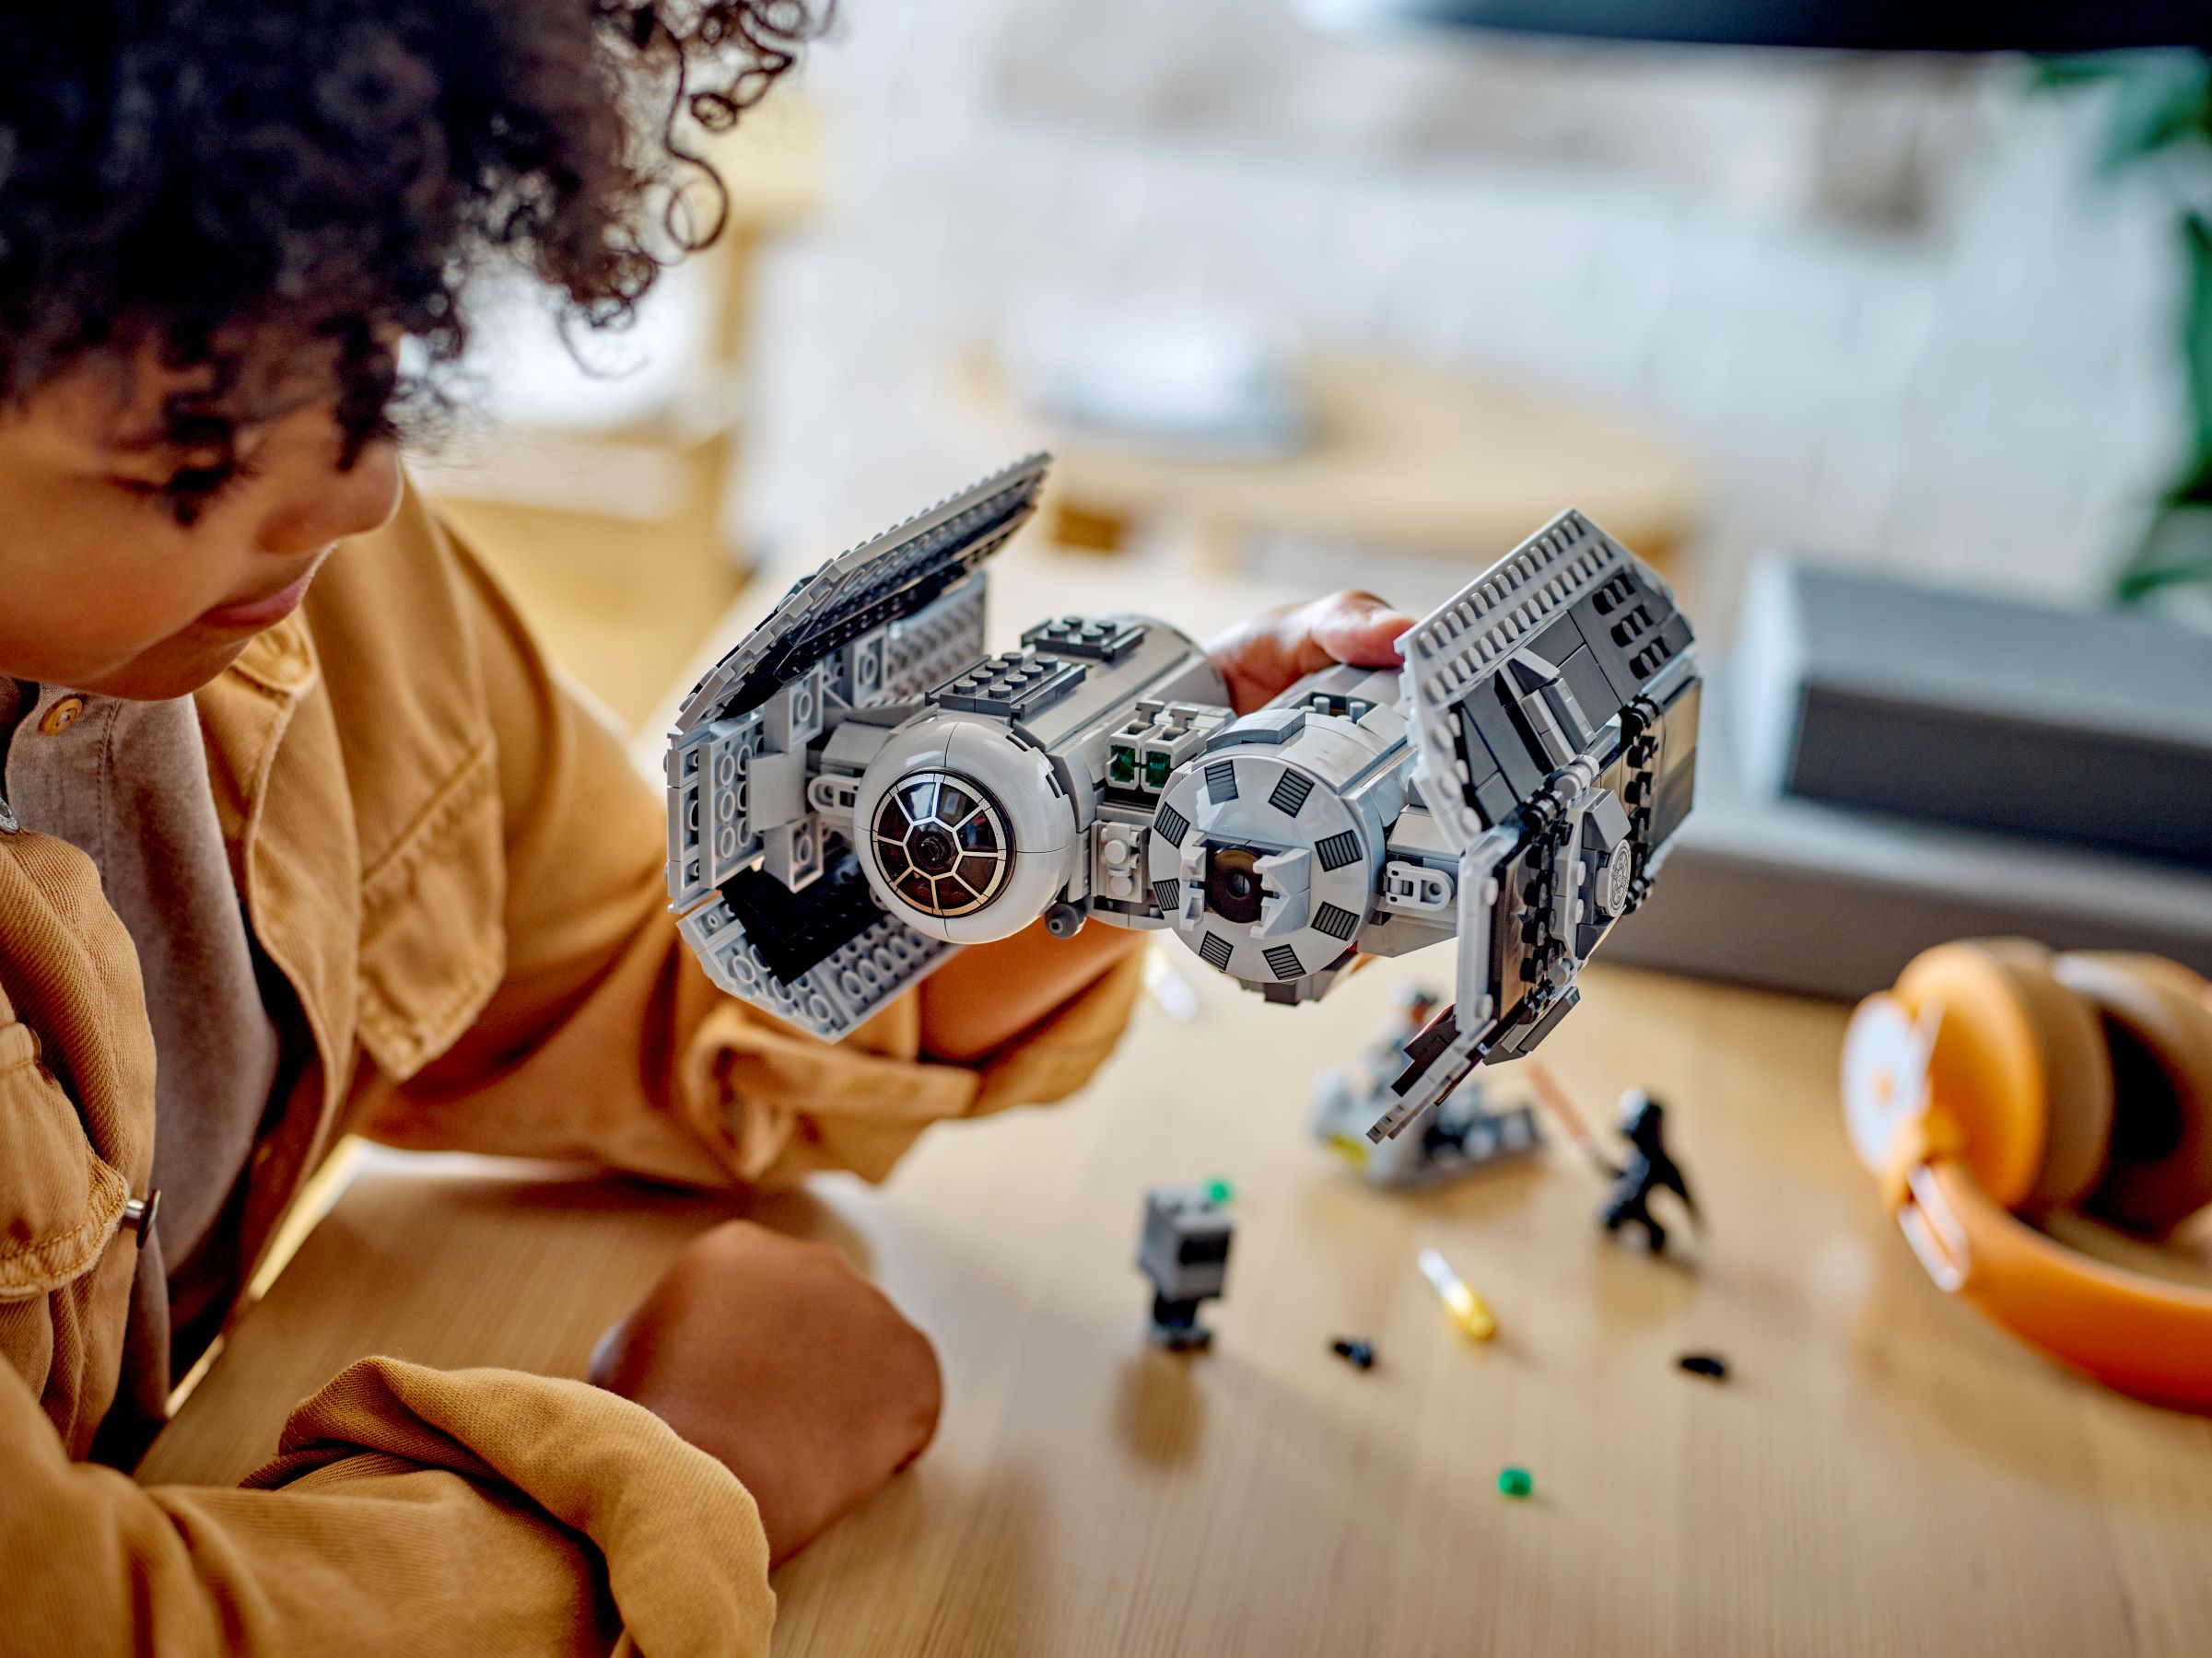 LEGO Star Wars 75347 Le bombardier TIE pas cher - Lego - Achat moins cher